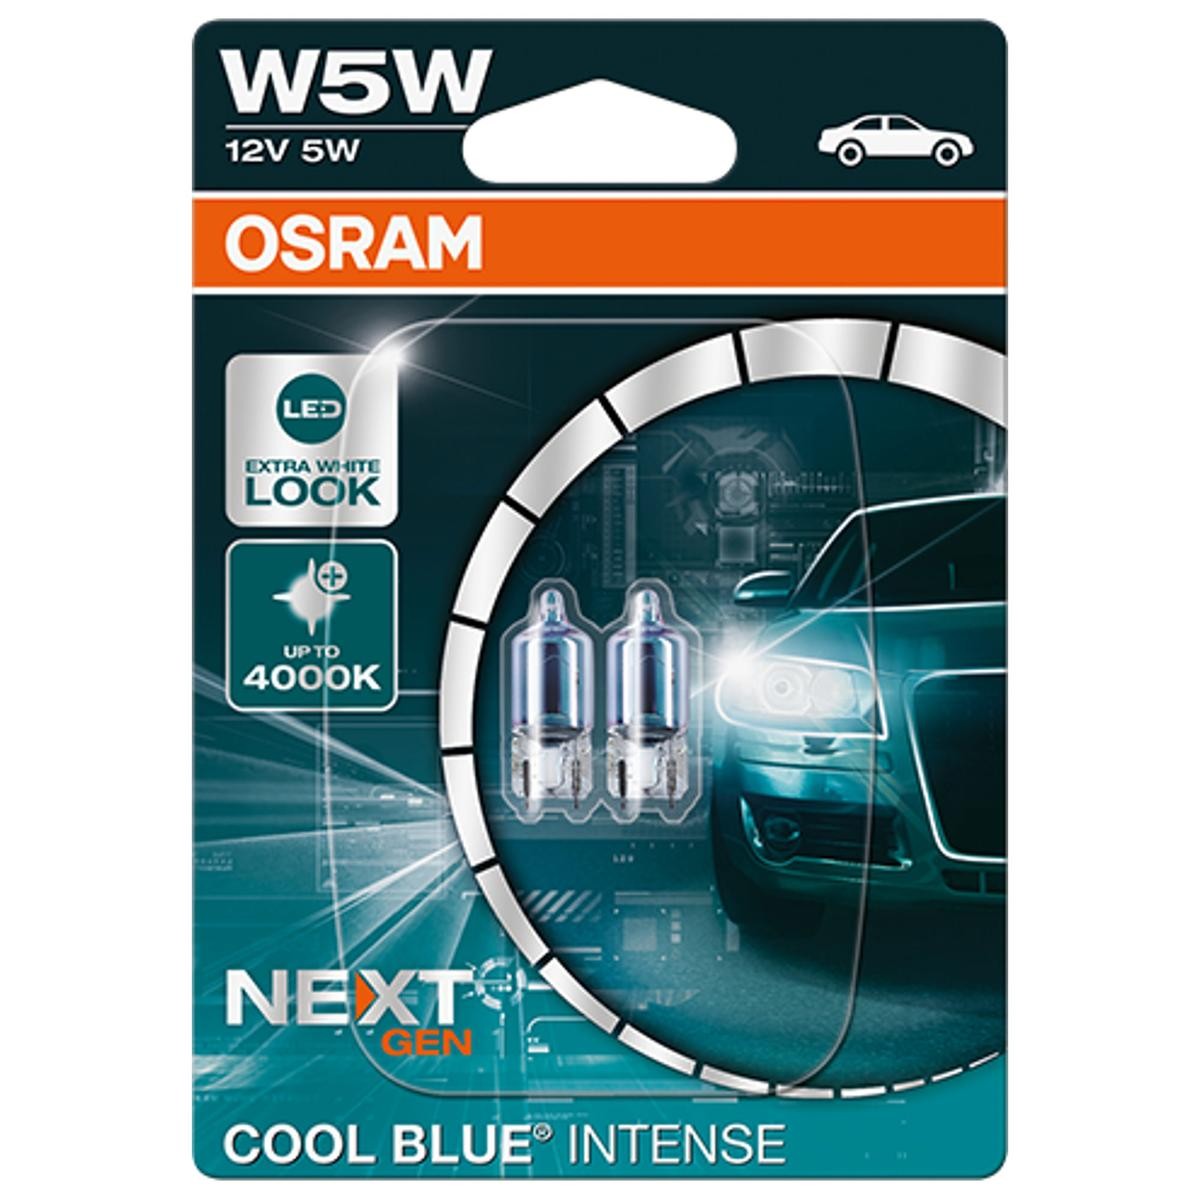 VESPA 946 Blinkerbirne 12V 5W, W5W OSRAM COOL BLUE INTENSE next Generation 2825CBN-02B